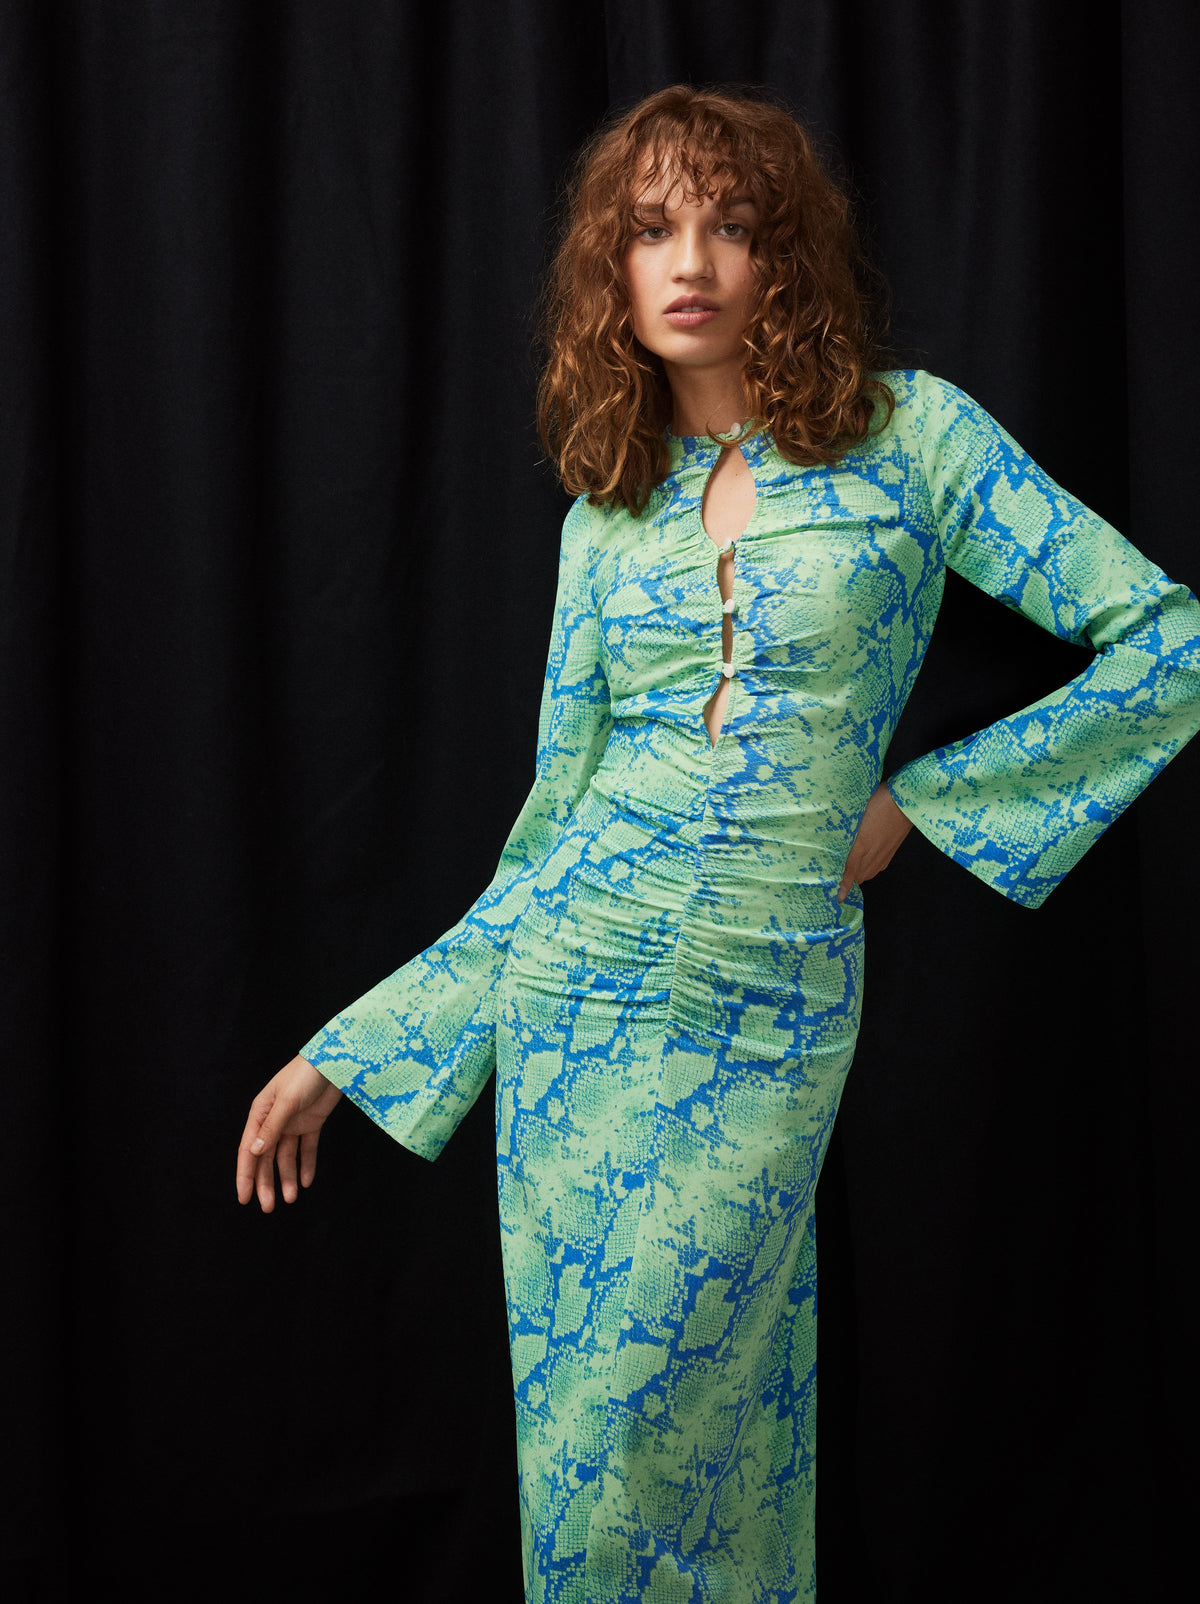 Marlena Blue Snake Print Dress